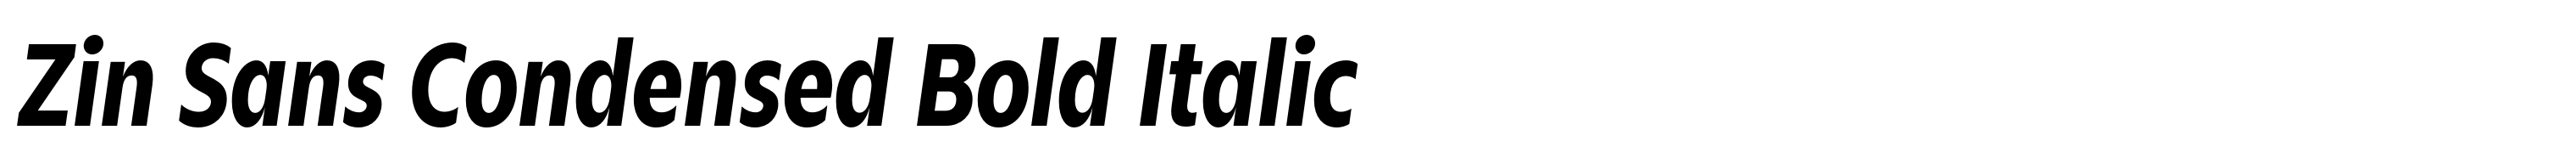 Zin Sans Condensed Bold Italic